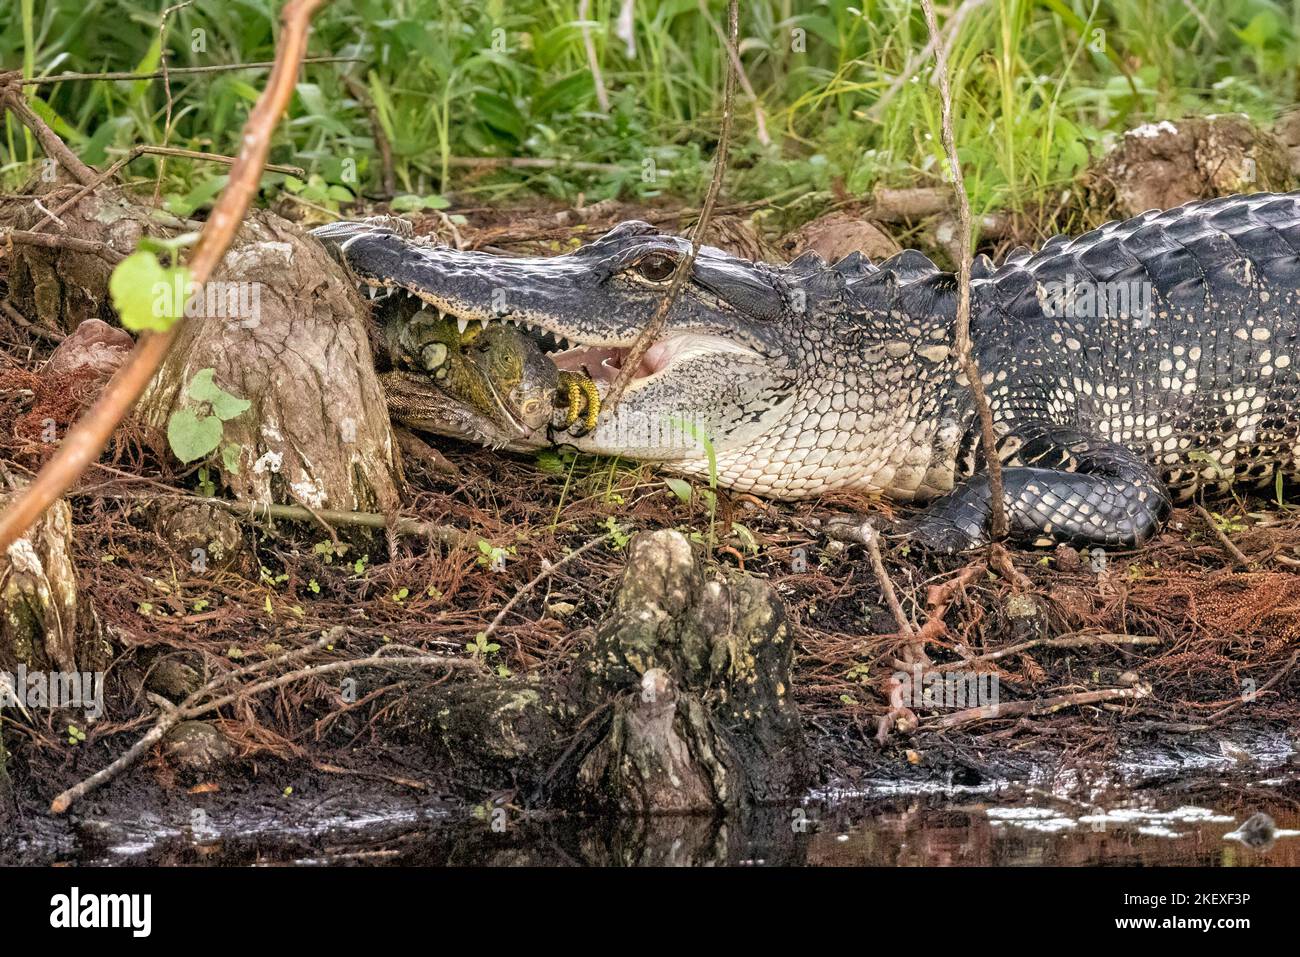 American alligator (Alligator mississippiensis) eating an invasive Green Iguana (Iguana iguana) at Green Cay Wetlands, Boynton Beach, Florida, USA Stock Photo